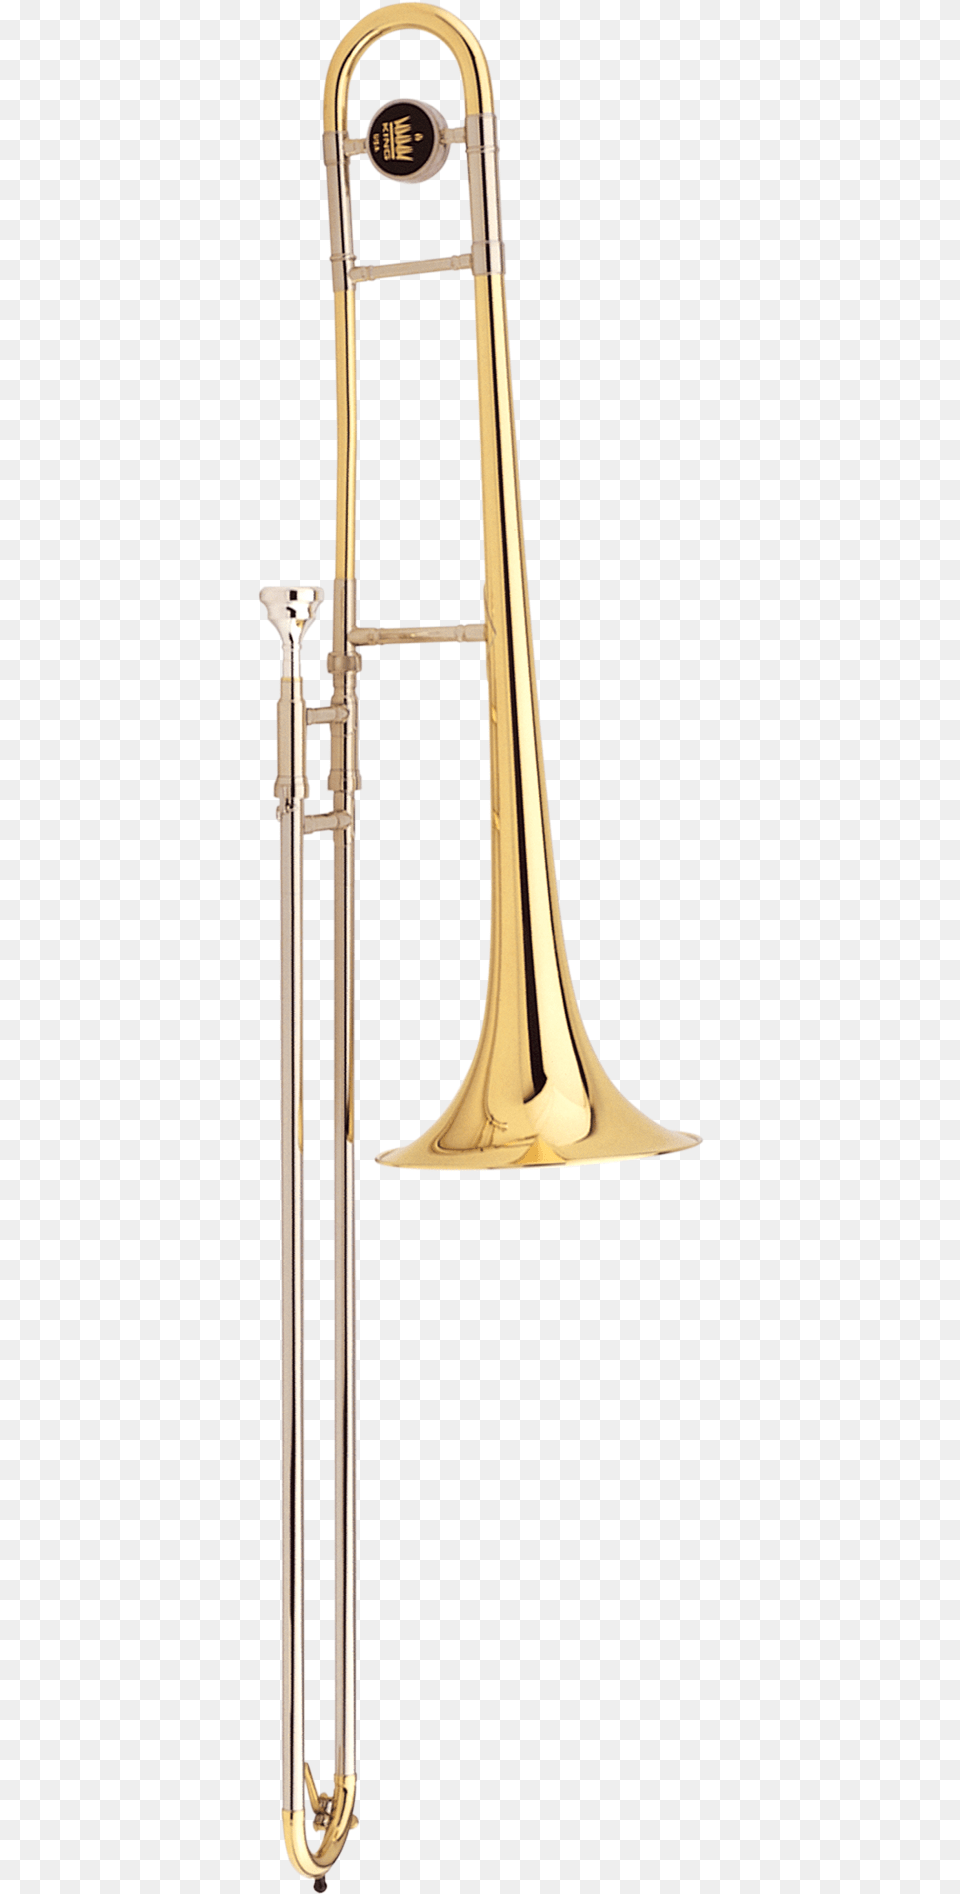 King Student Model 606 Tenor Trombone Types Of Trombone, Musical Instrument, Brass Section Png Image